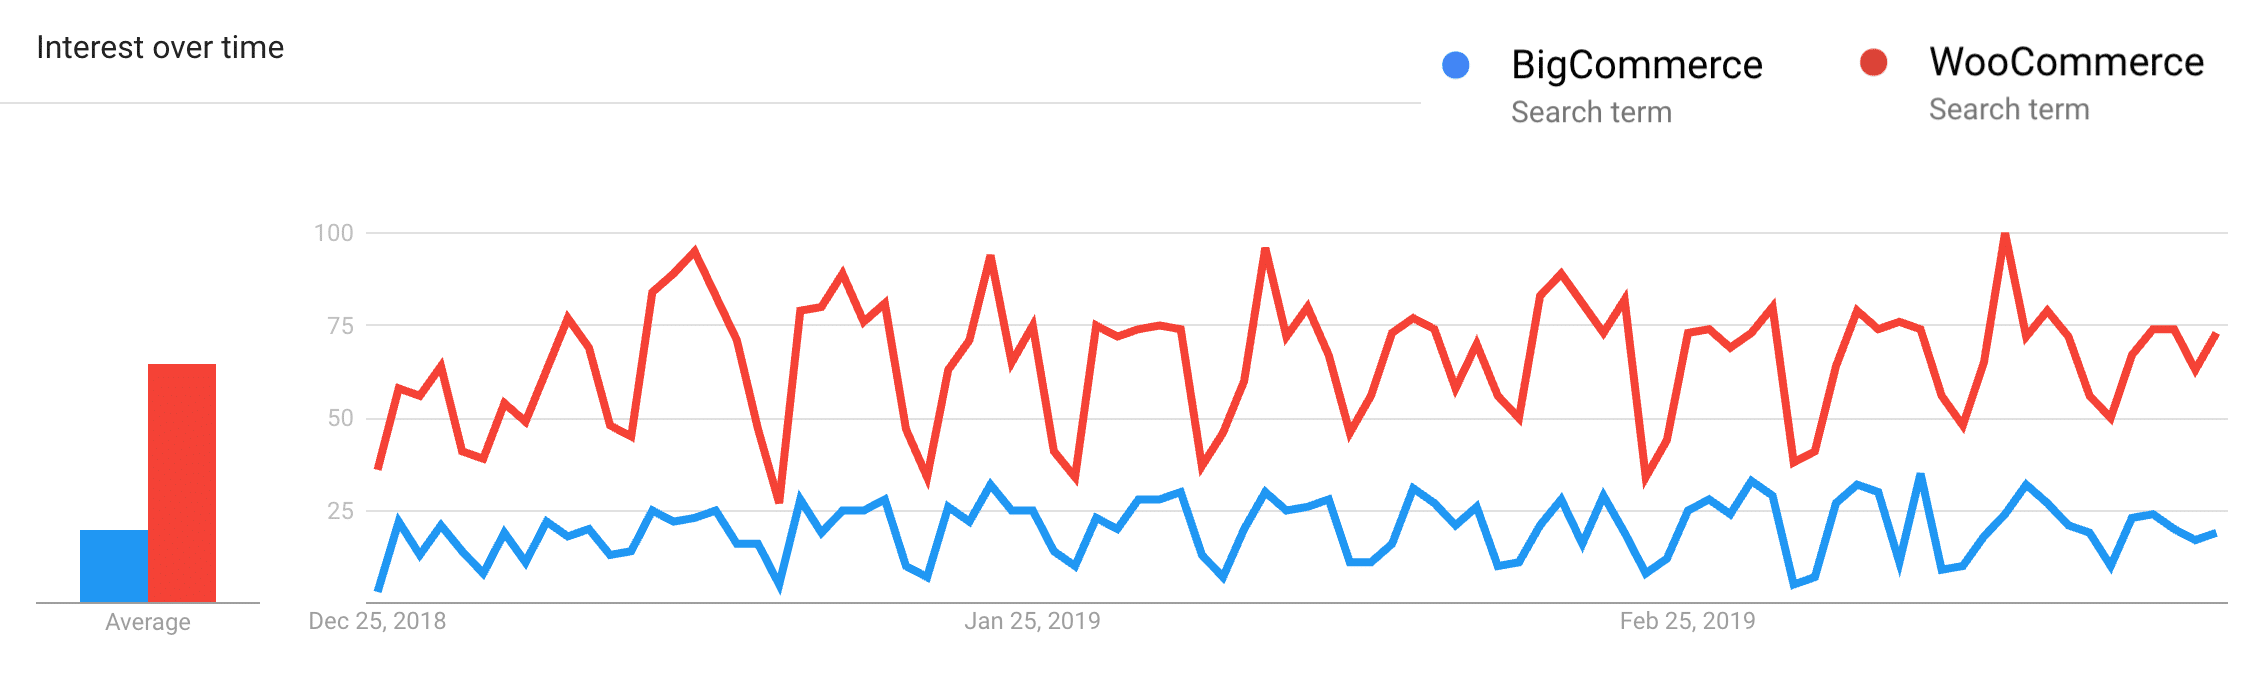 Google-trends - BigCommerce vs. WooCommerce